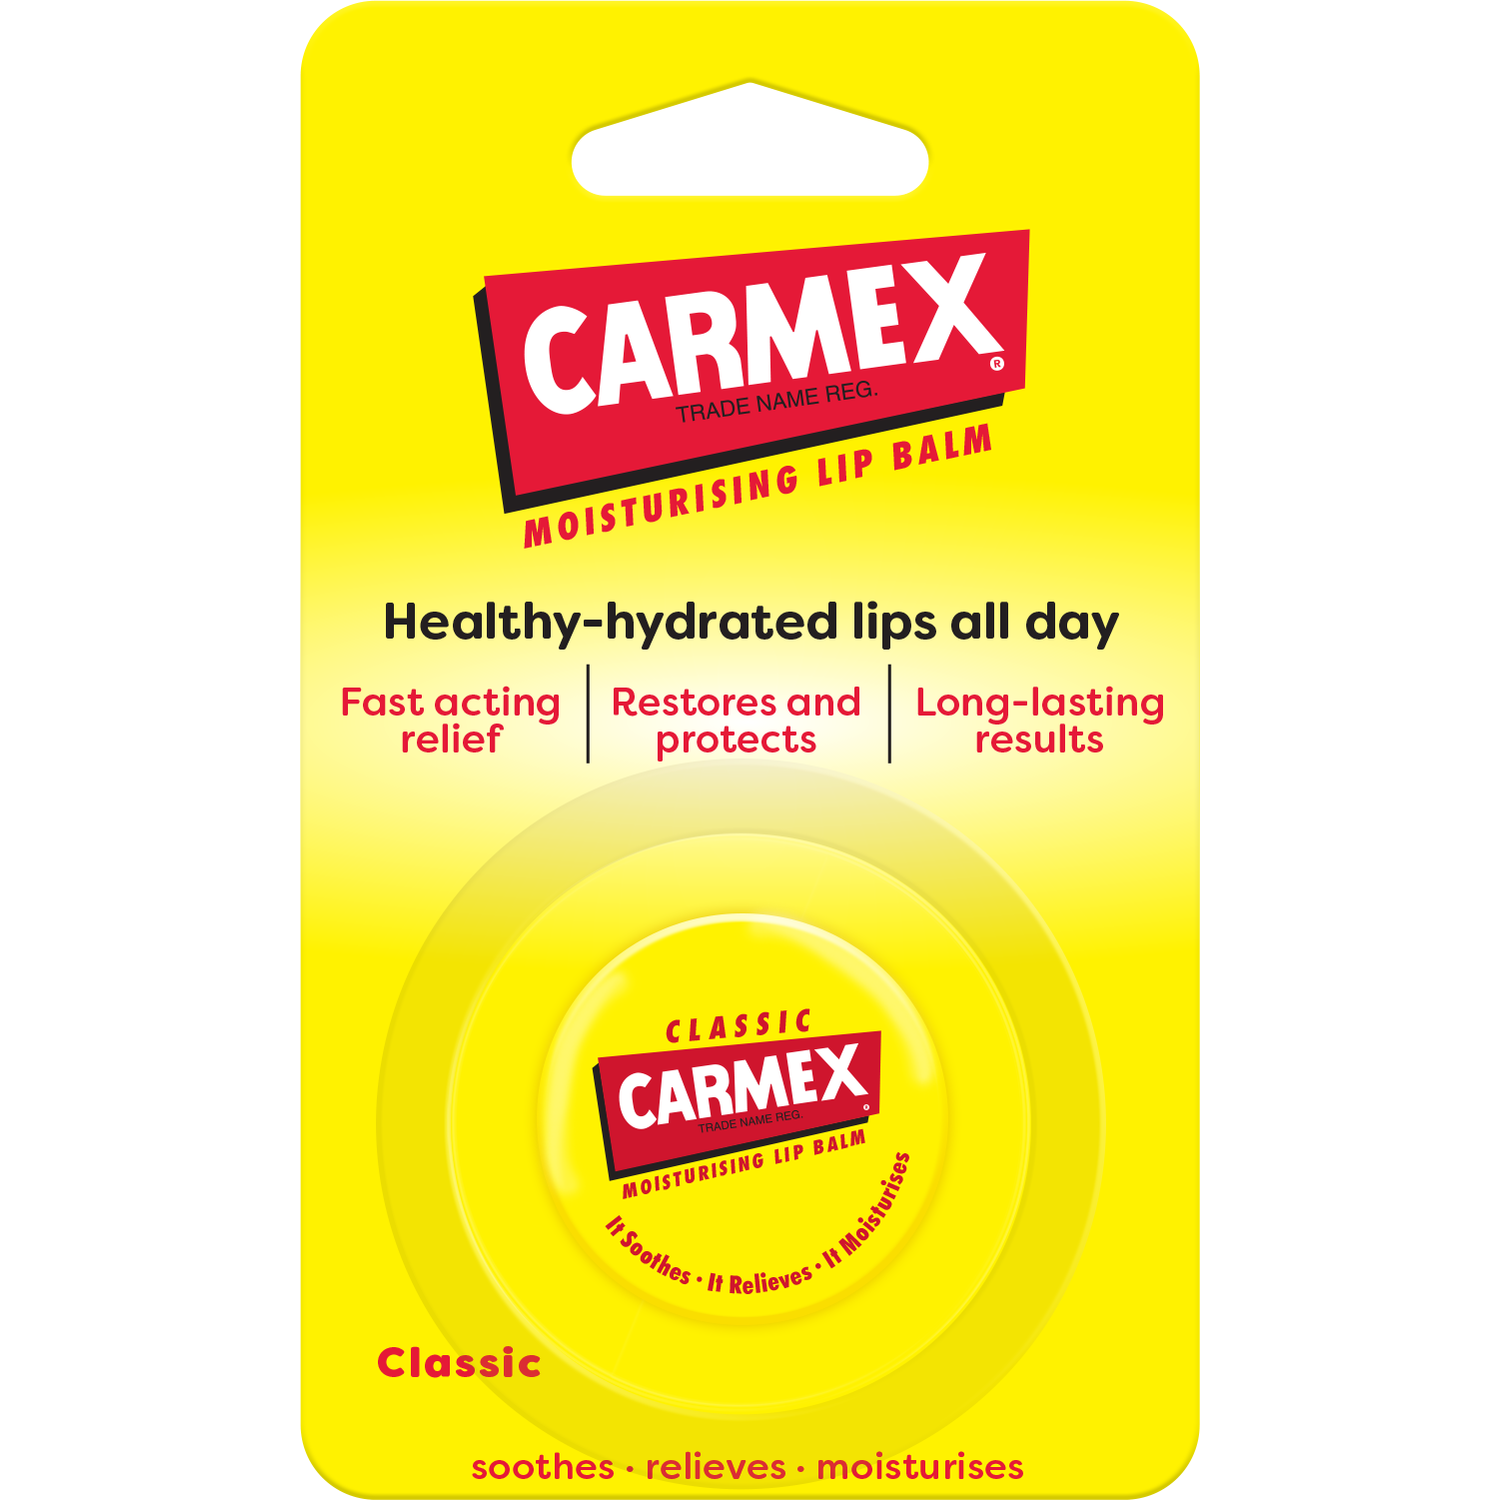 Carmex Moisturising Lip Balm Pot - Yellow / Original Image